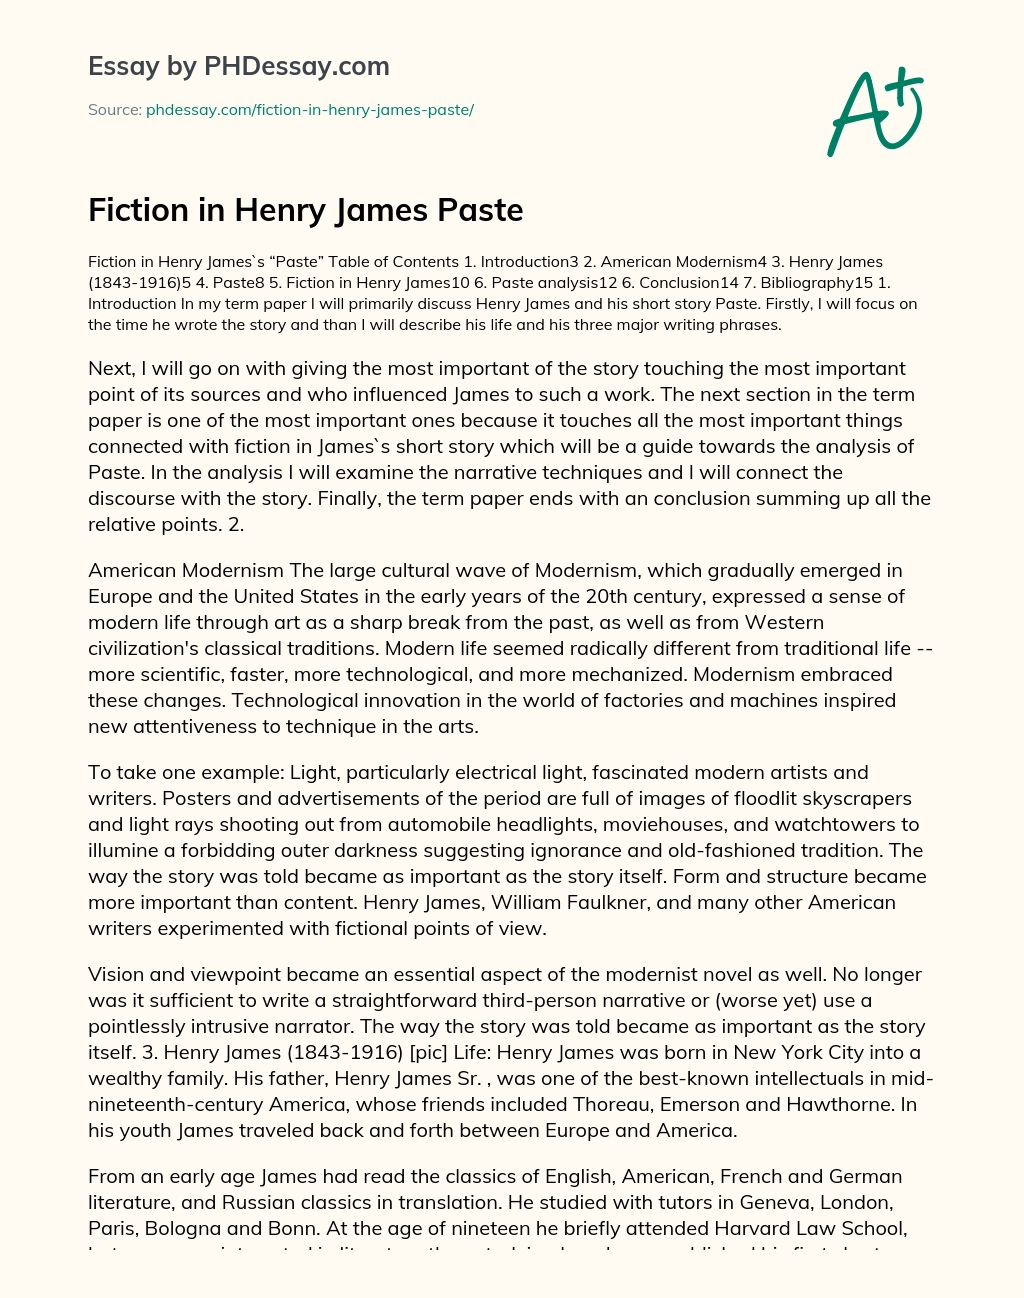 Fiction in Henry James Paste essay